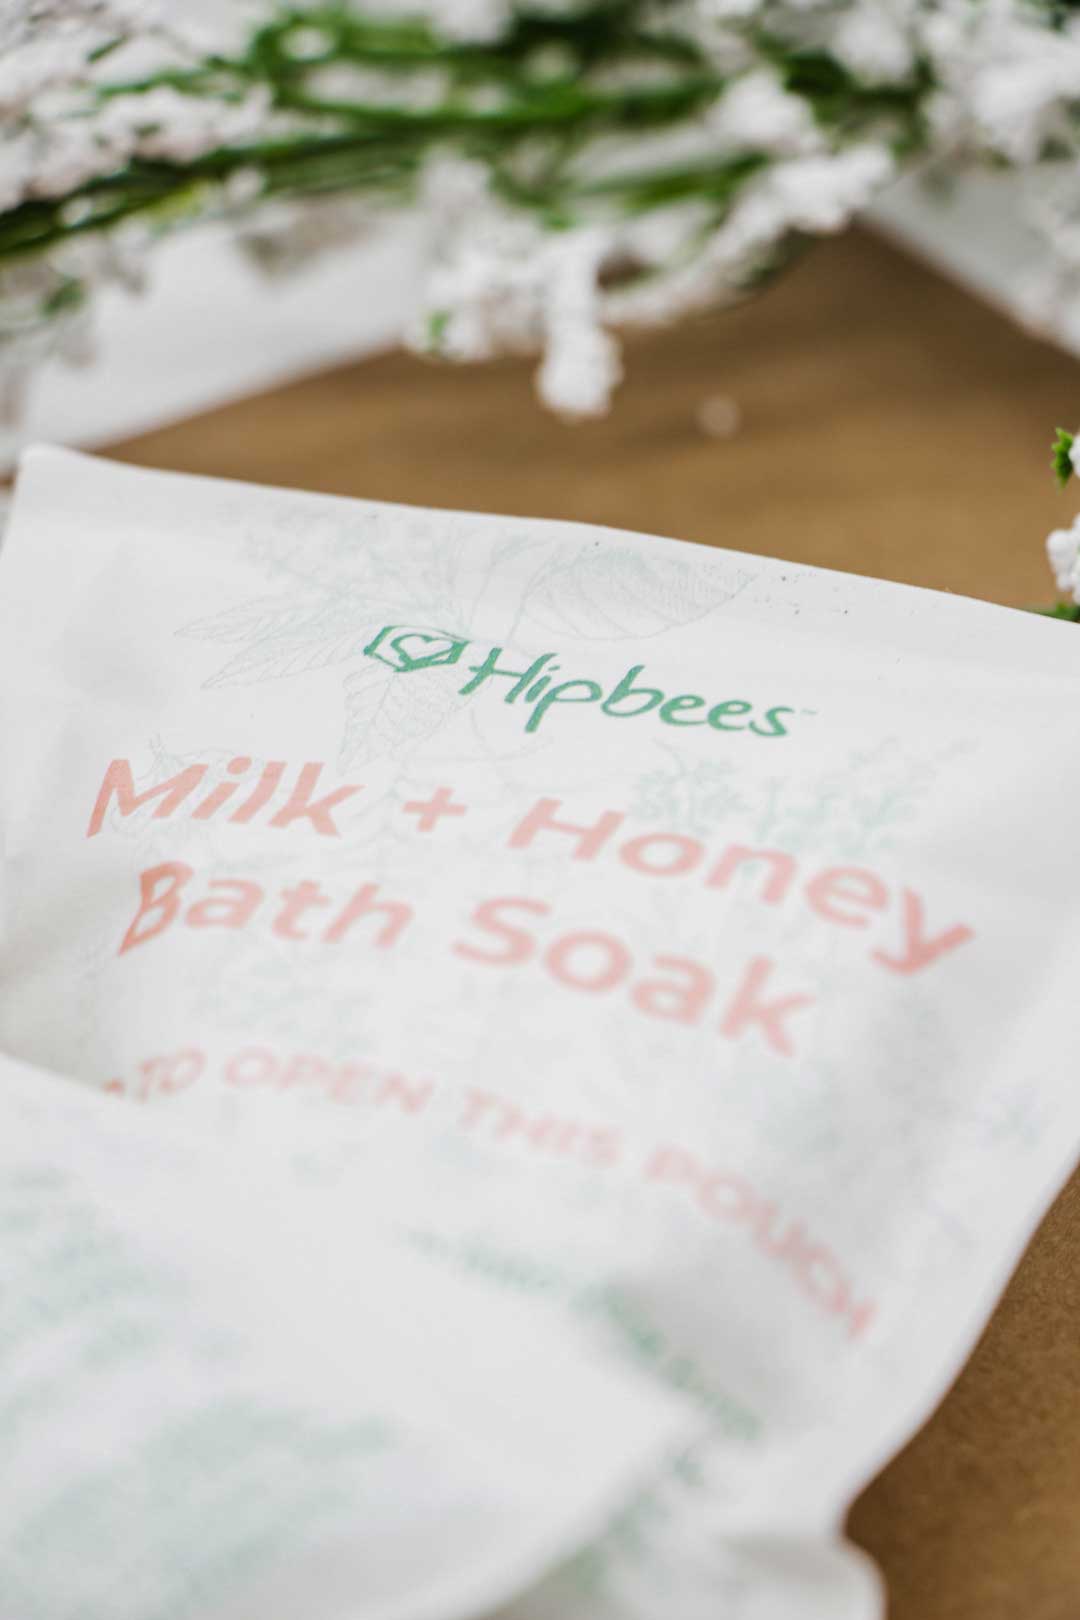 Milk and Honey Bath Soak - Hipbees